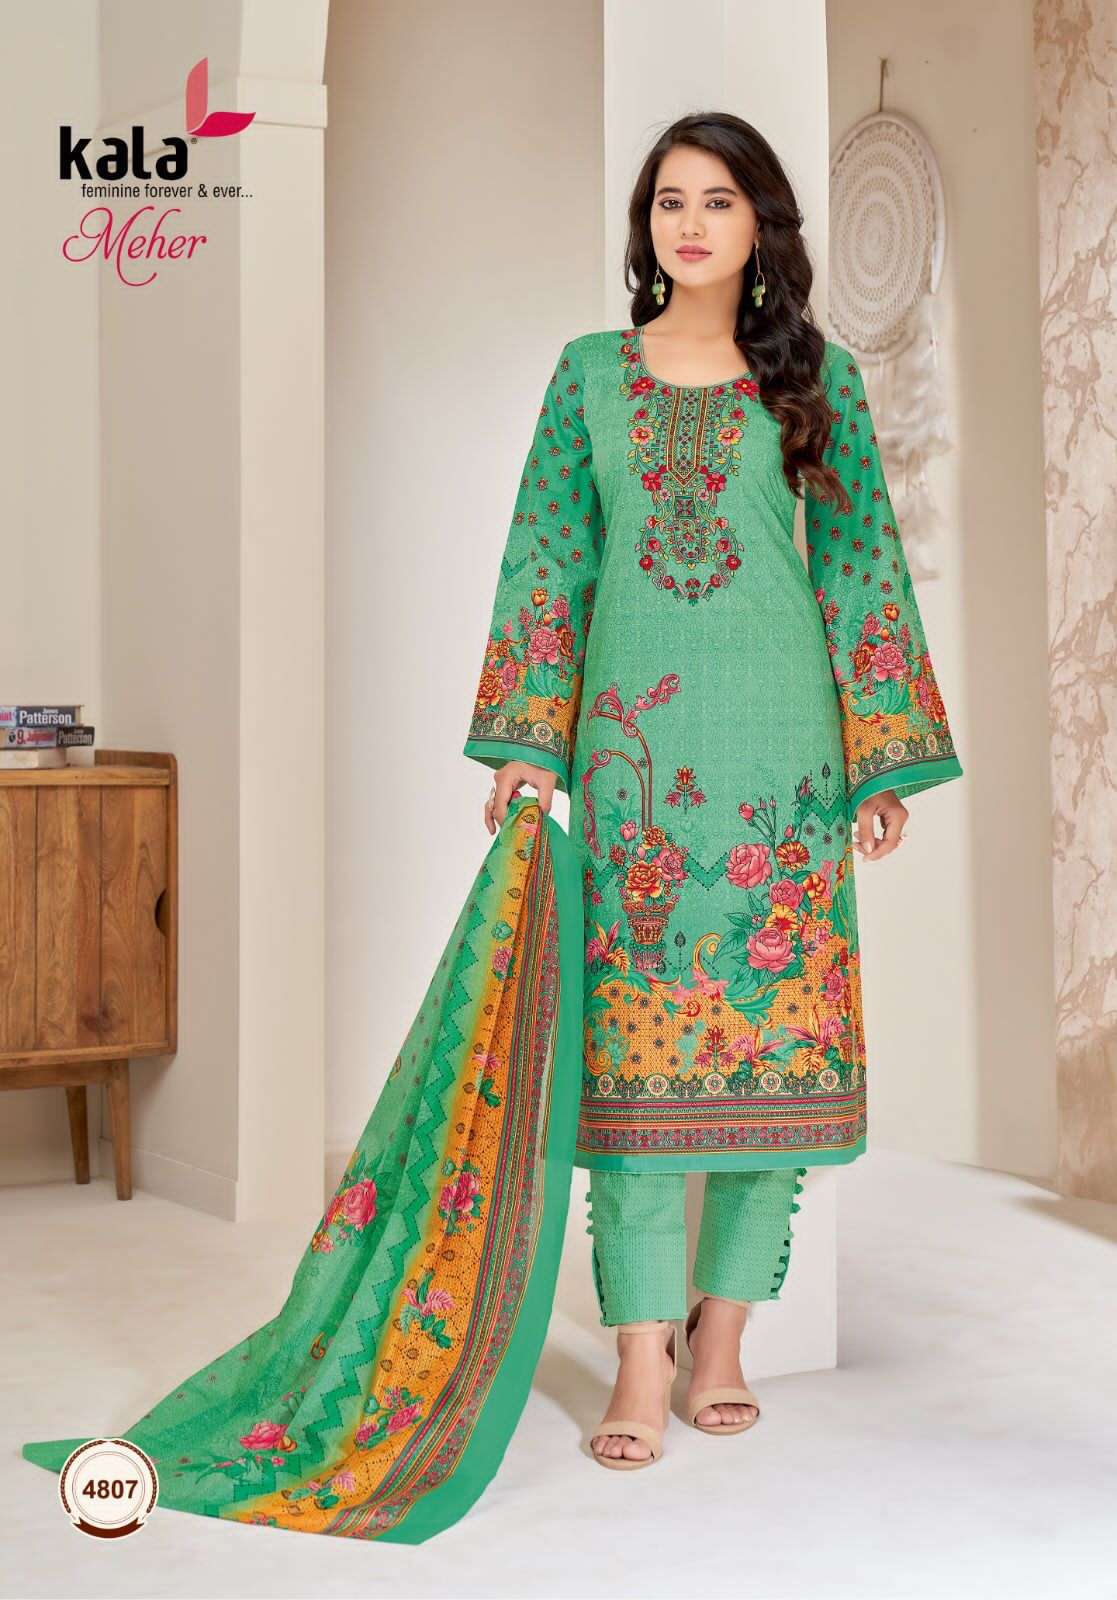 tarika kala meher vol-9 4801-4812 series designer wedding wear salwar kameez wholesaler surat gujarat